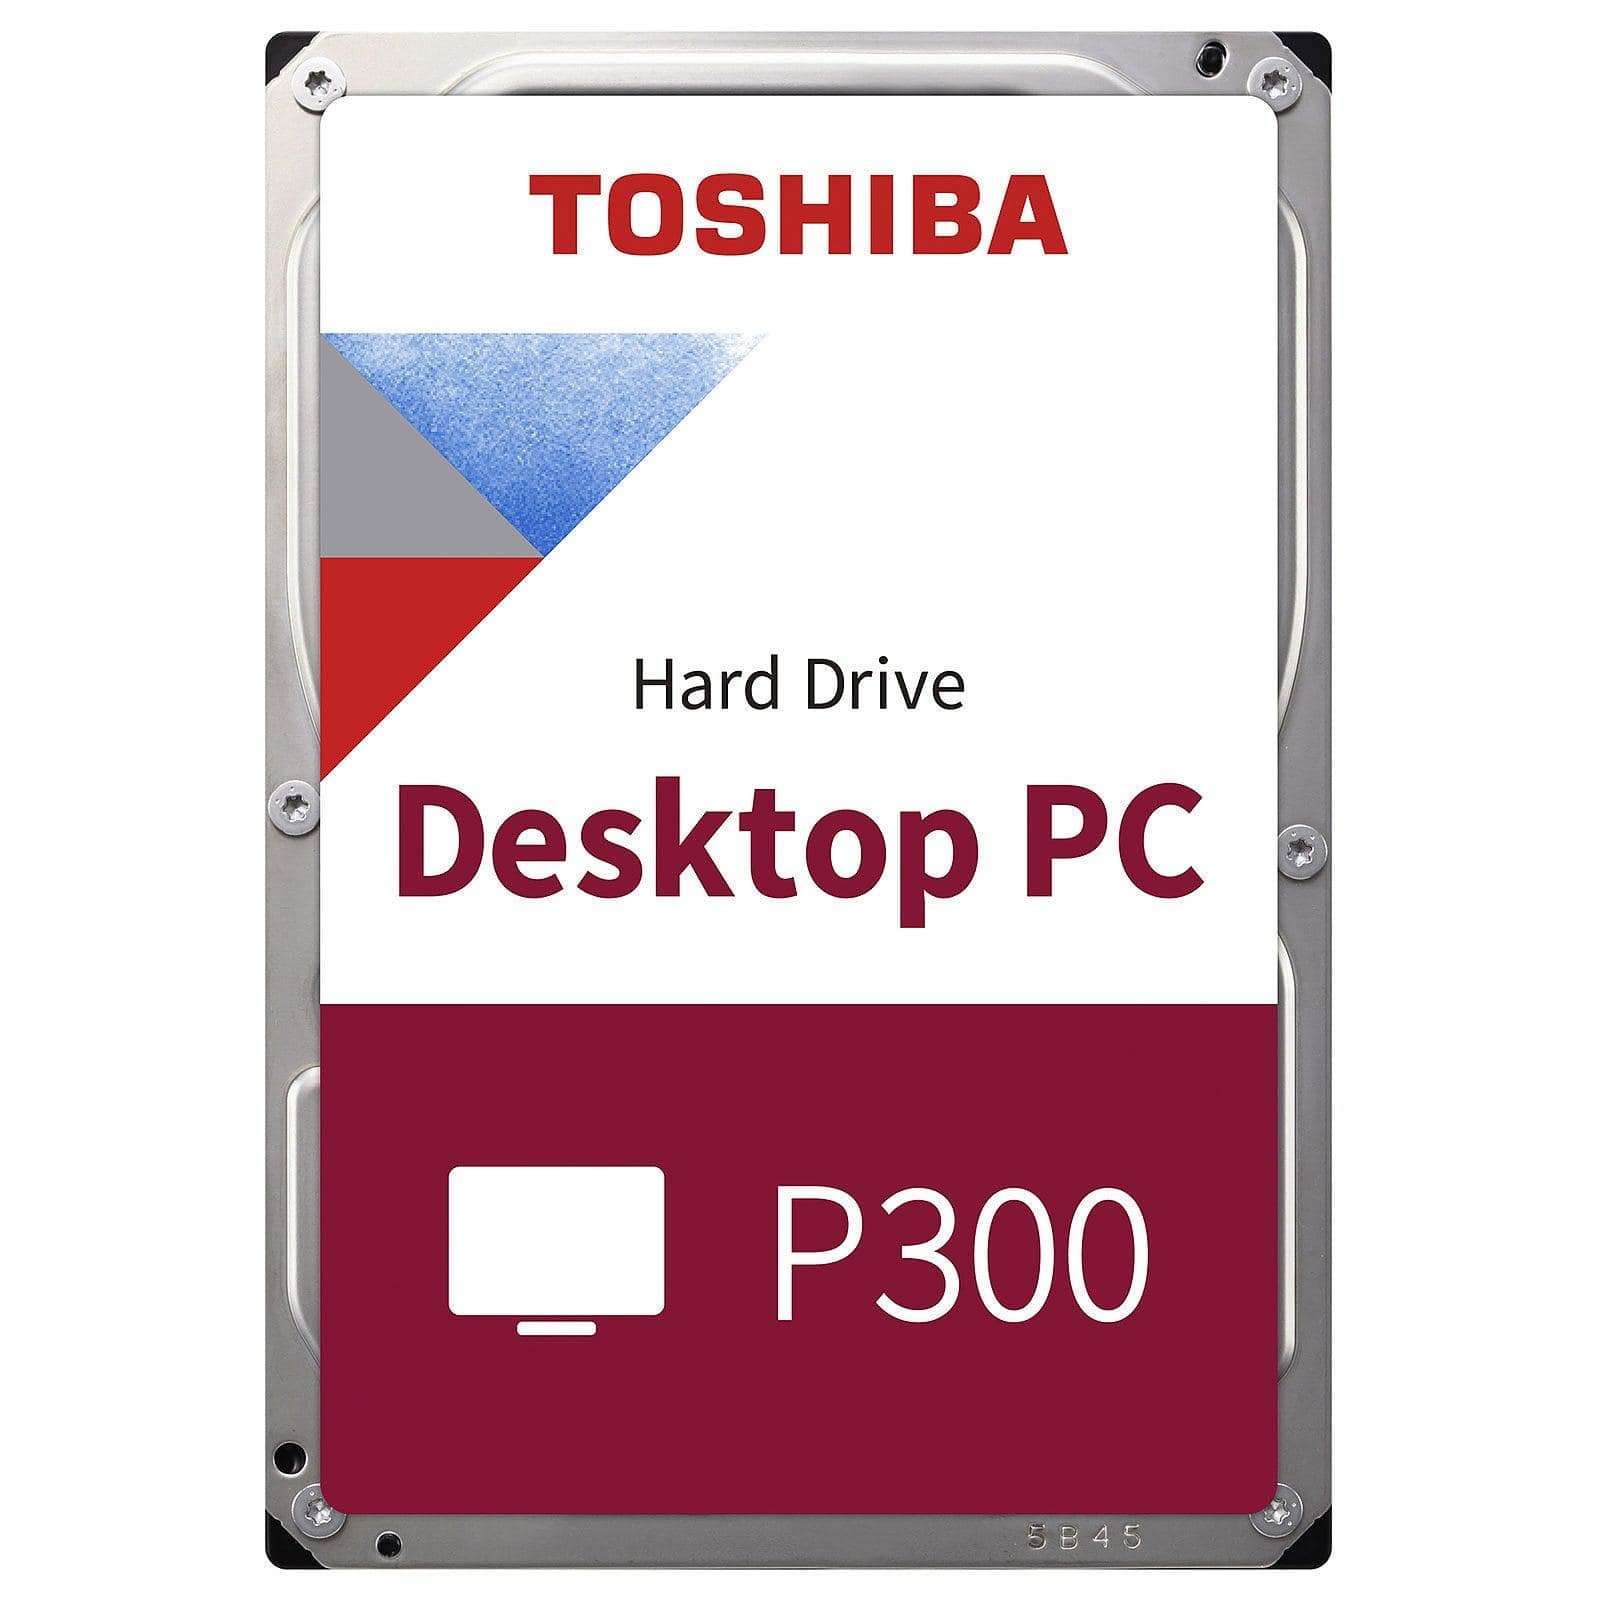 Toshiba P300 maroc Prix HDD pas cher - smartmarket.ma